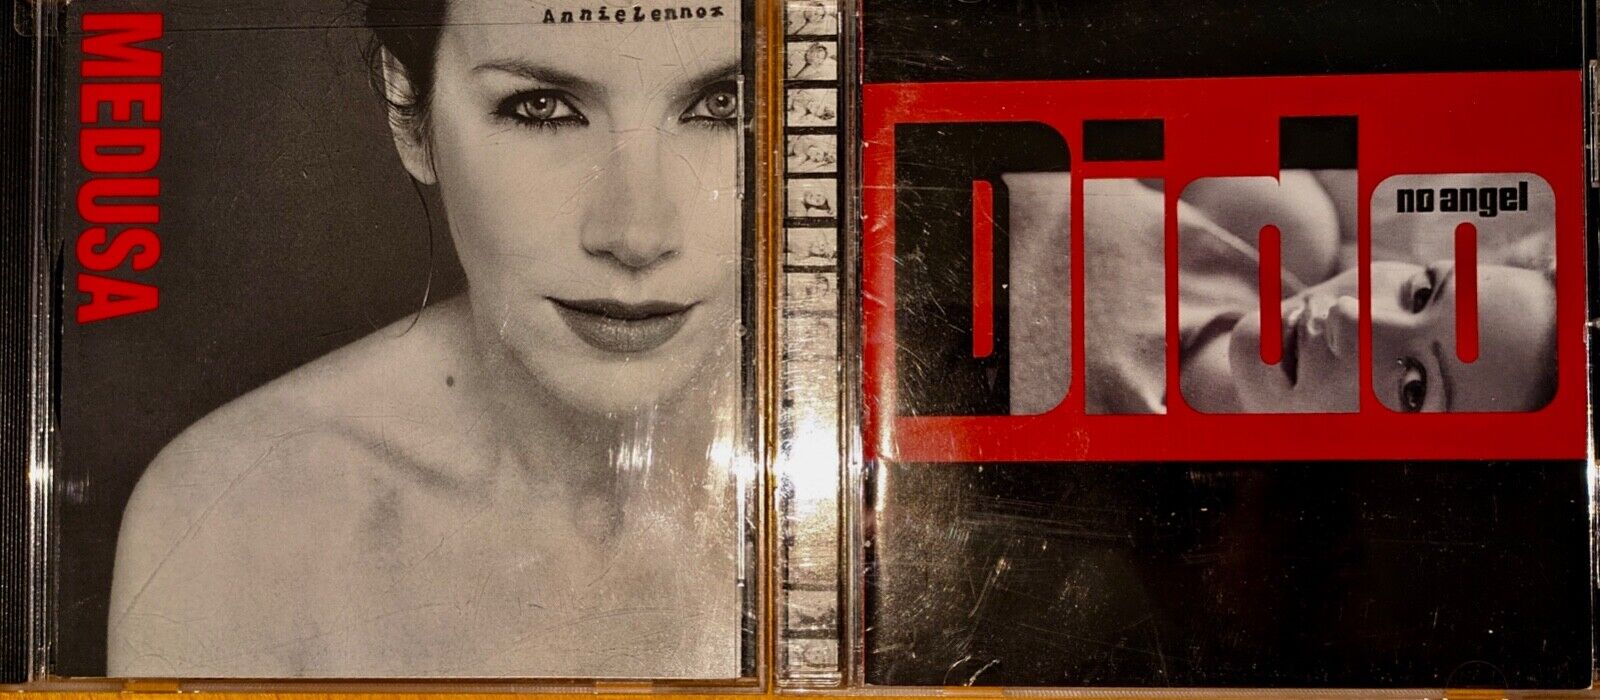 2-Musical Divas CDs: Medusa by Annie Lennox & No Angel by Dido [very good]